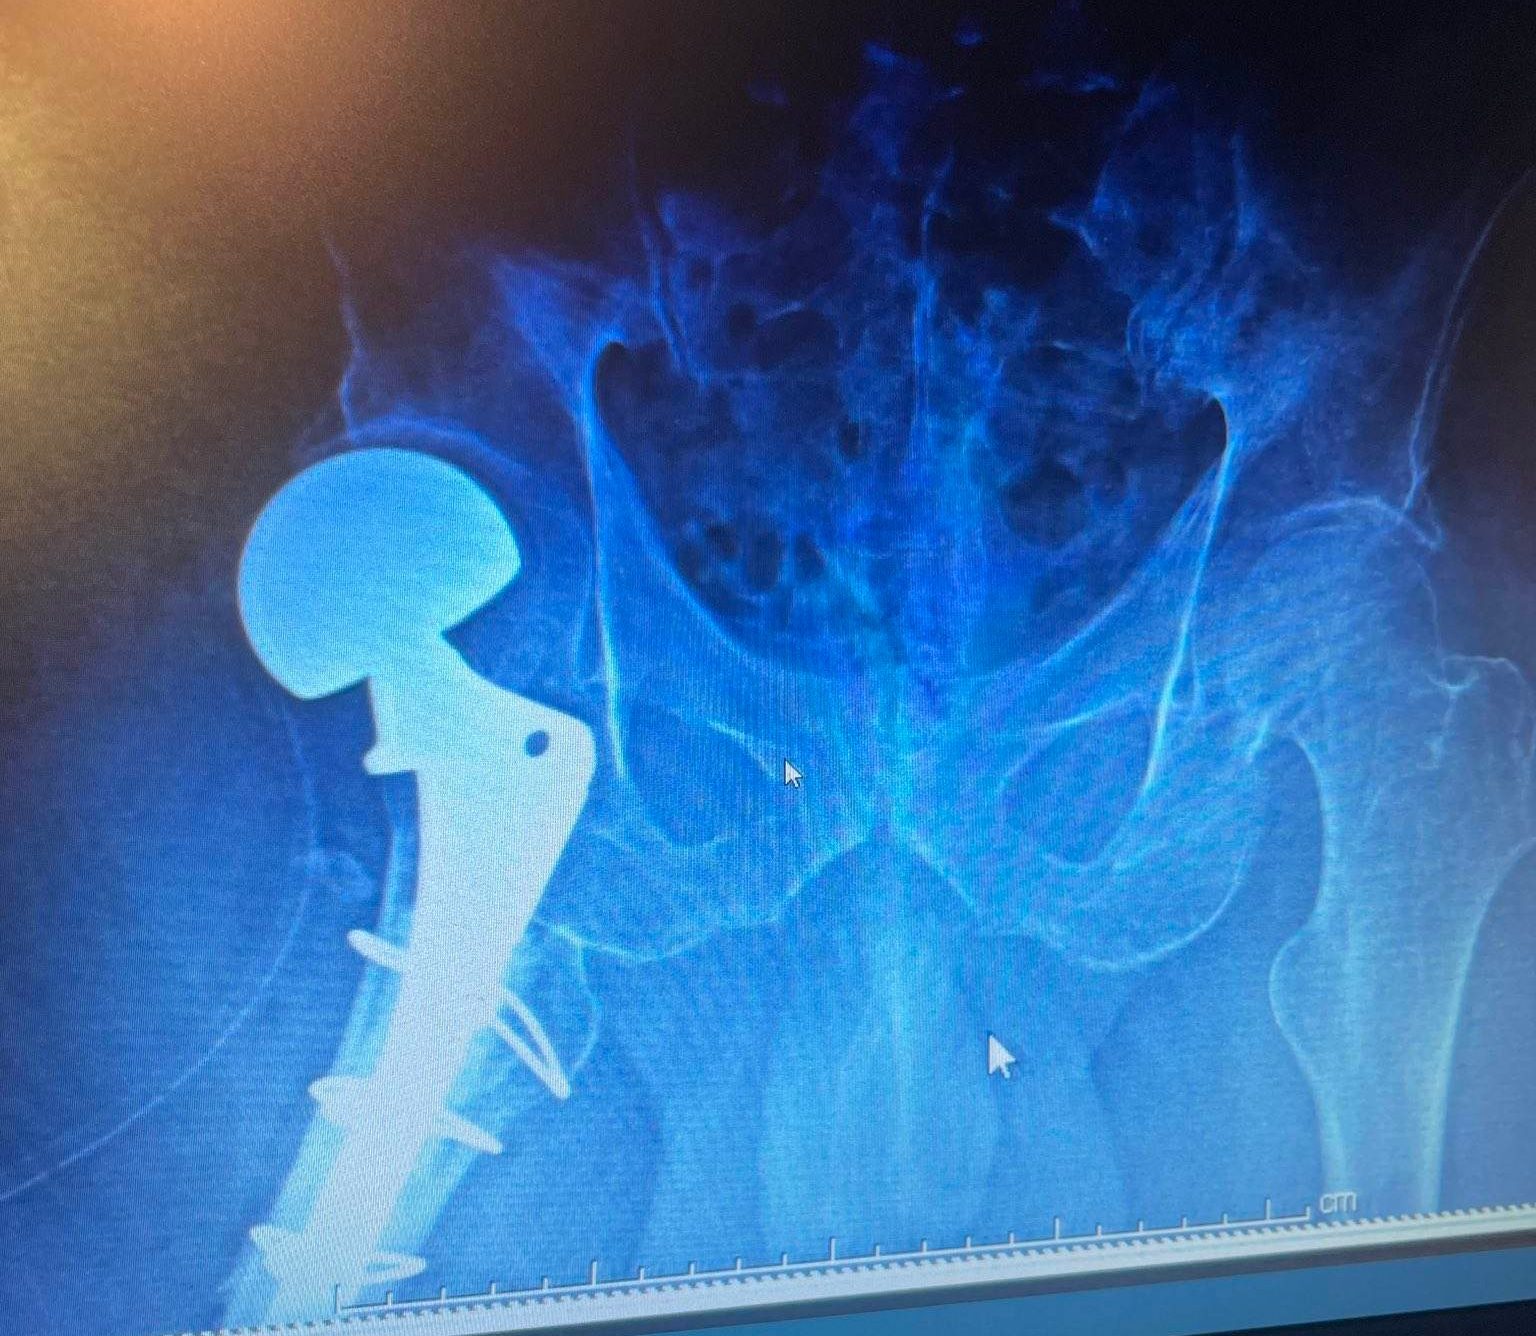 Odd hip replacement technique